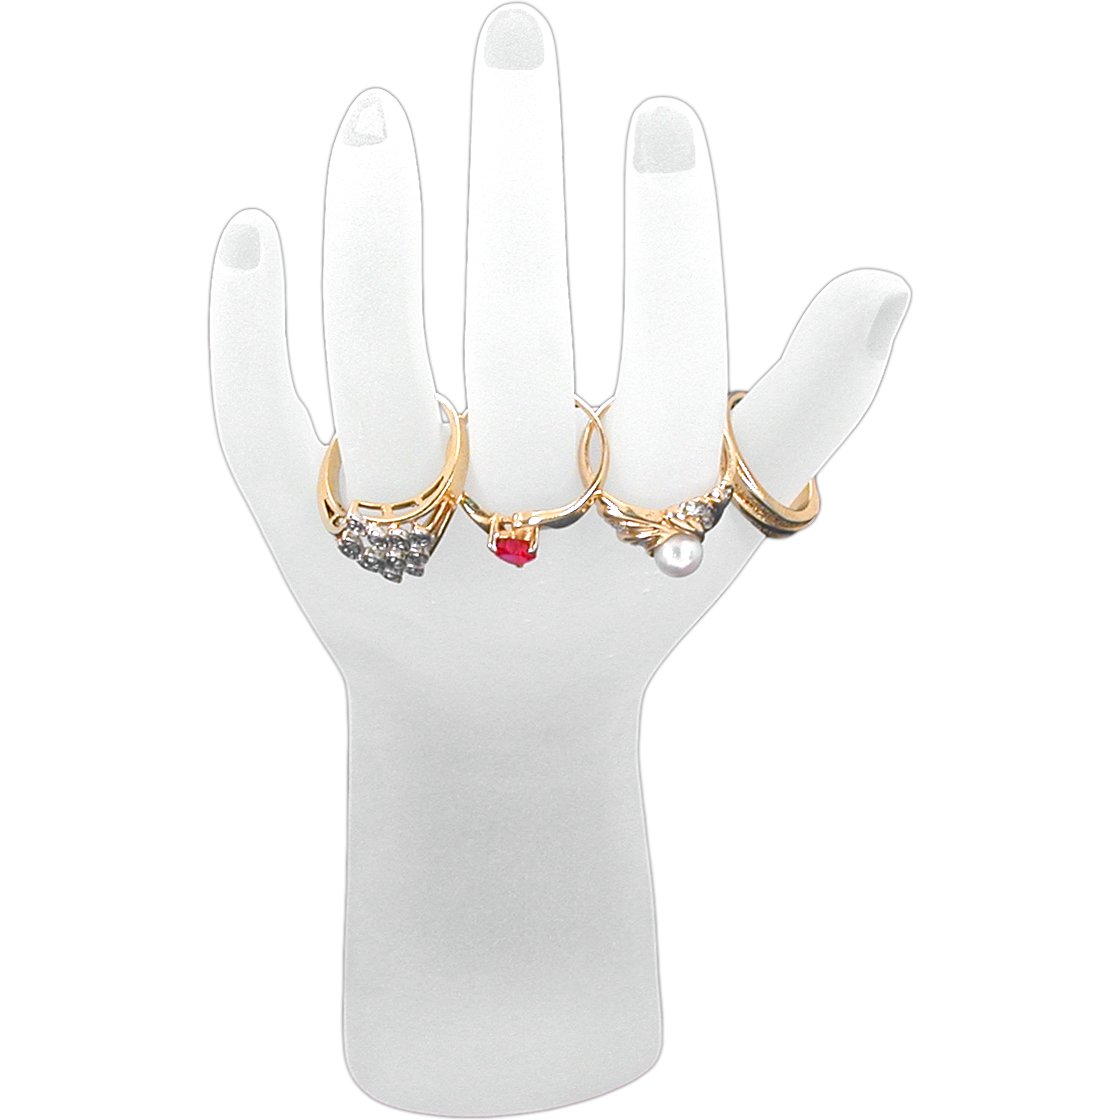 White Hand Bracelet Chain Display Jewelry Showcase Unit